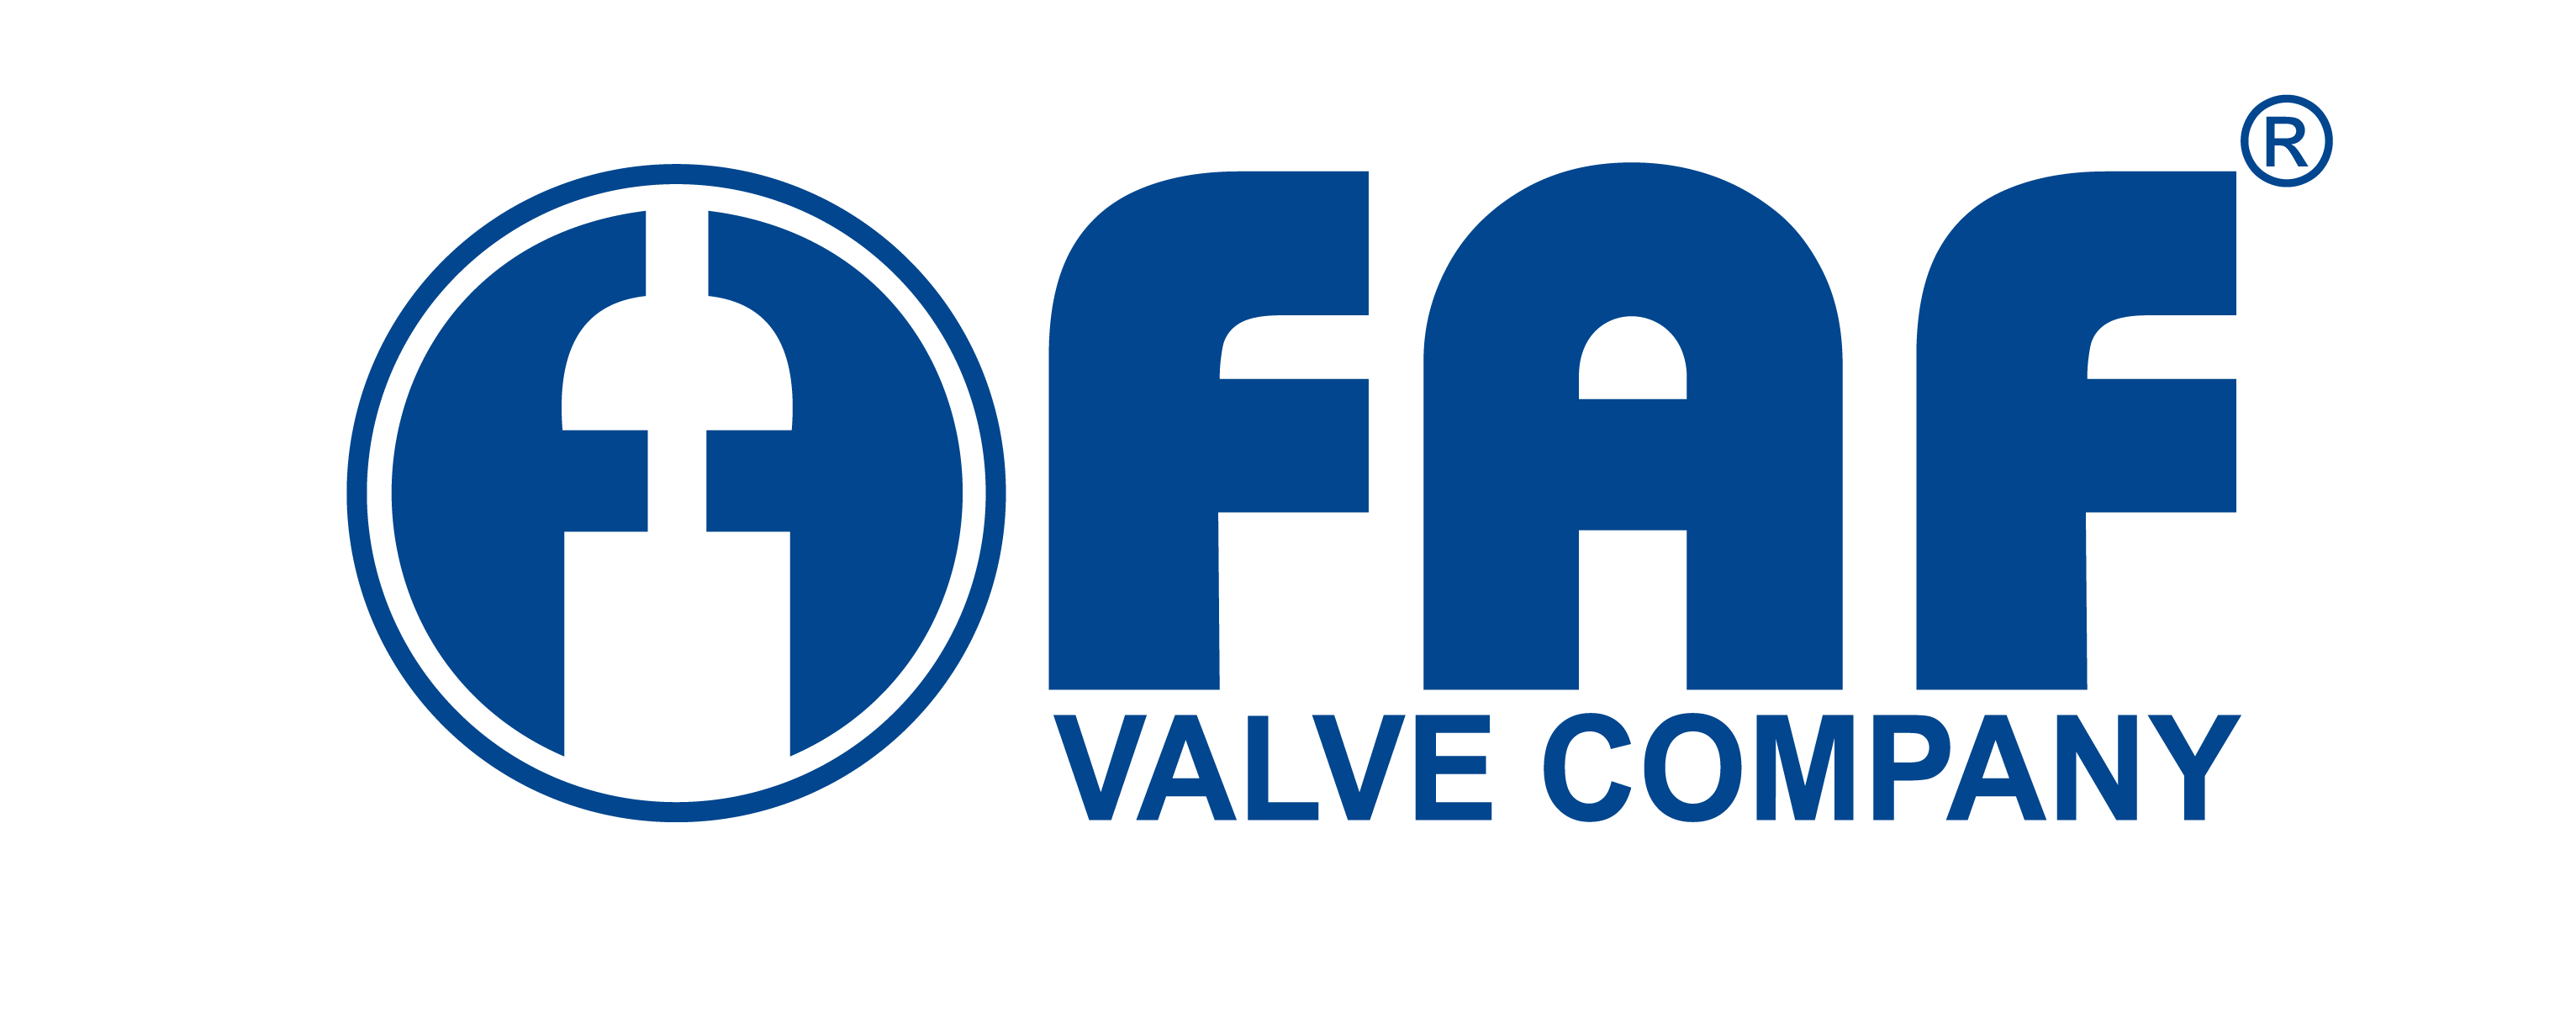 Логотип фирм производителей трубопроводной арматуры. Фаф вана Санайи логотип. FAF. Запорная арматура фаф. Ариэль пласткомплект